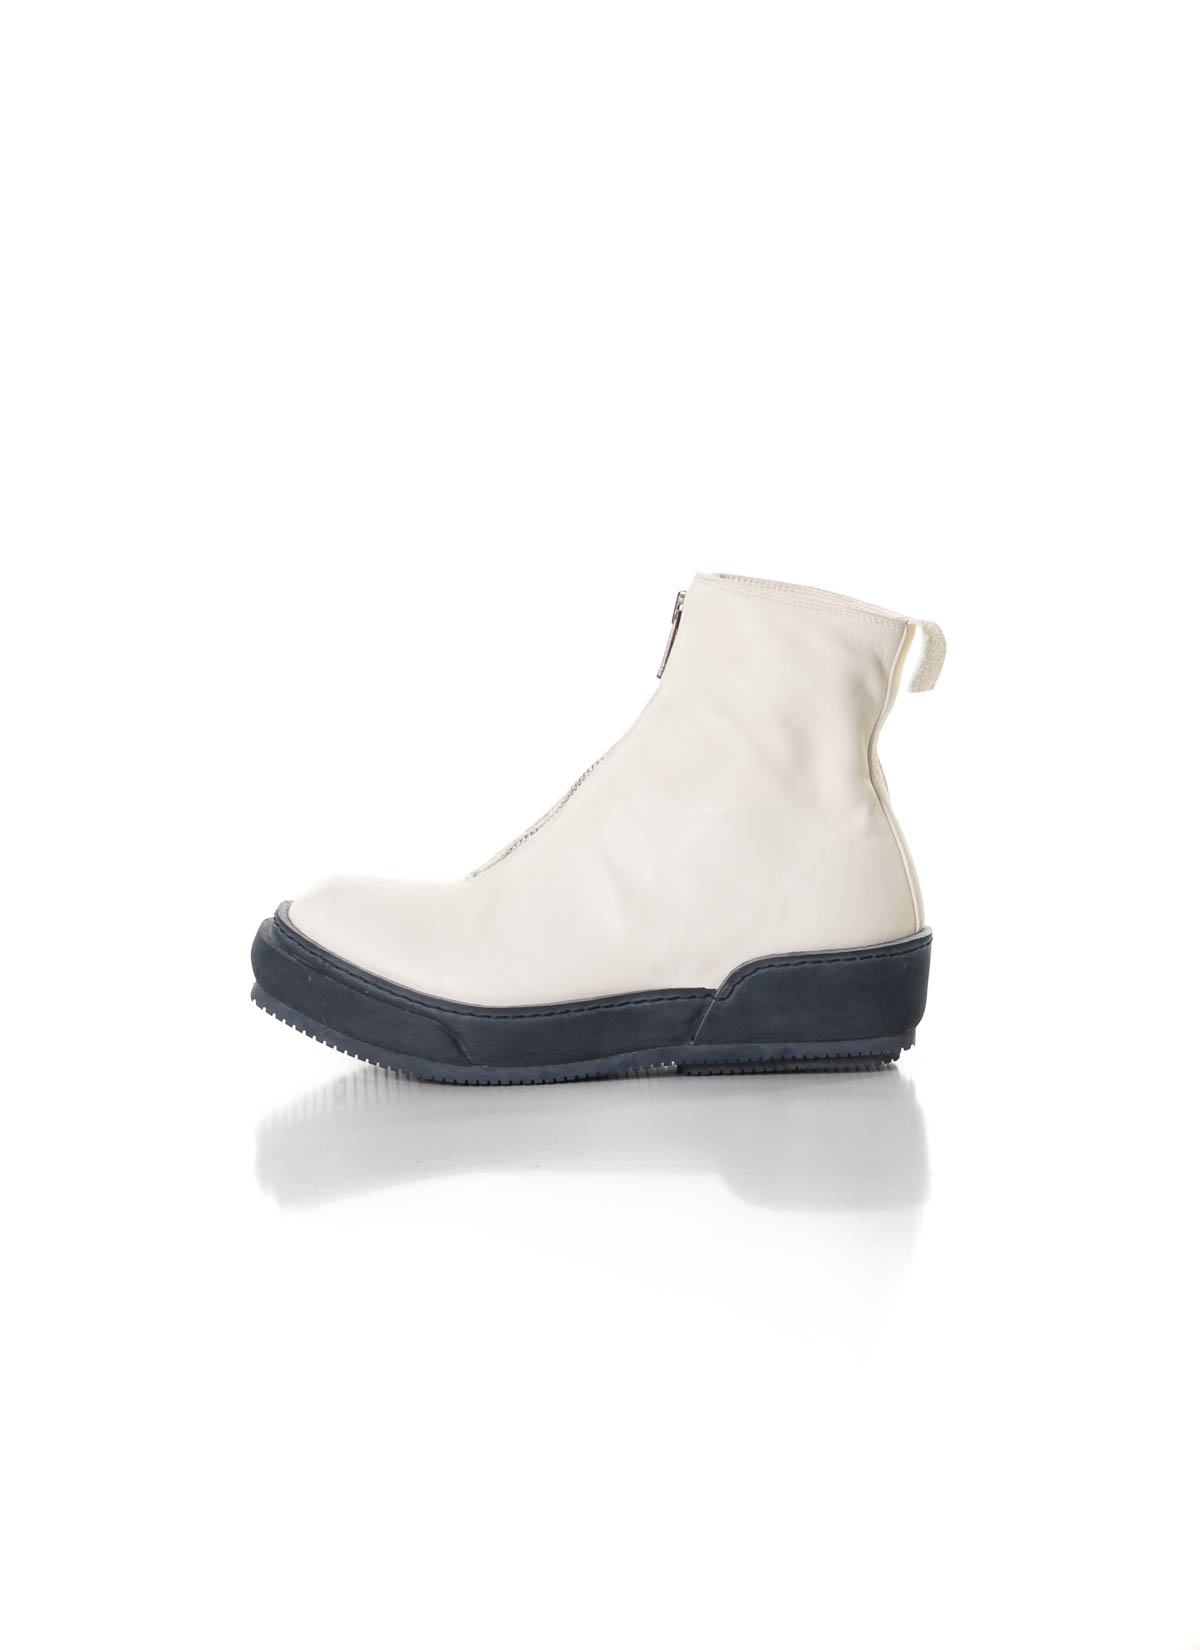 hide-m | GUIDI PLS Front Zip Sneaker rubber sole, white horse leather